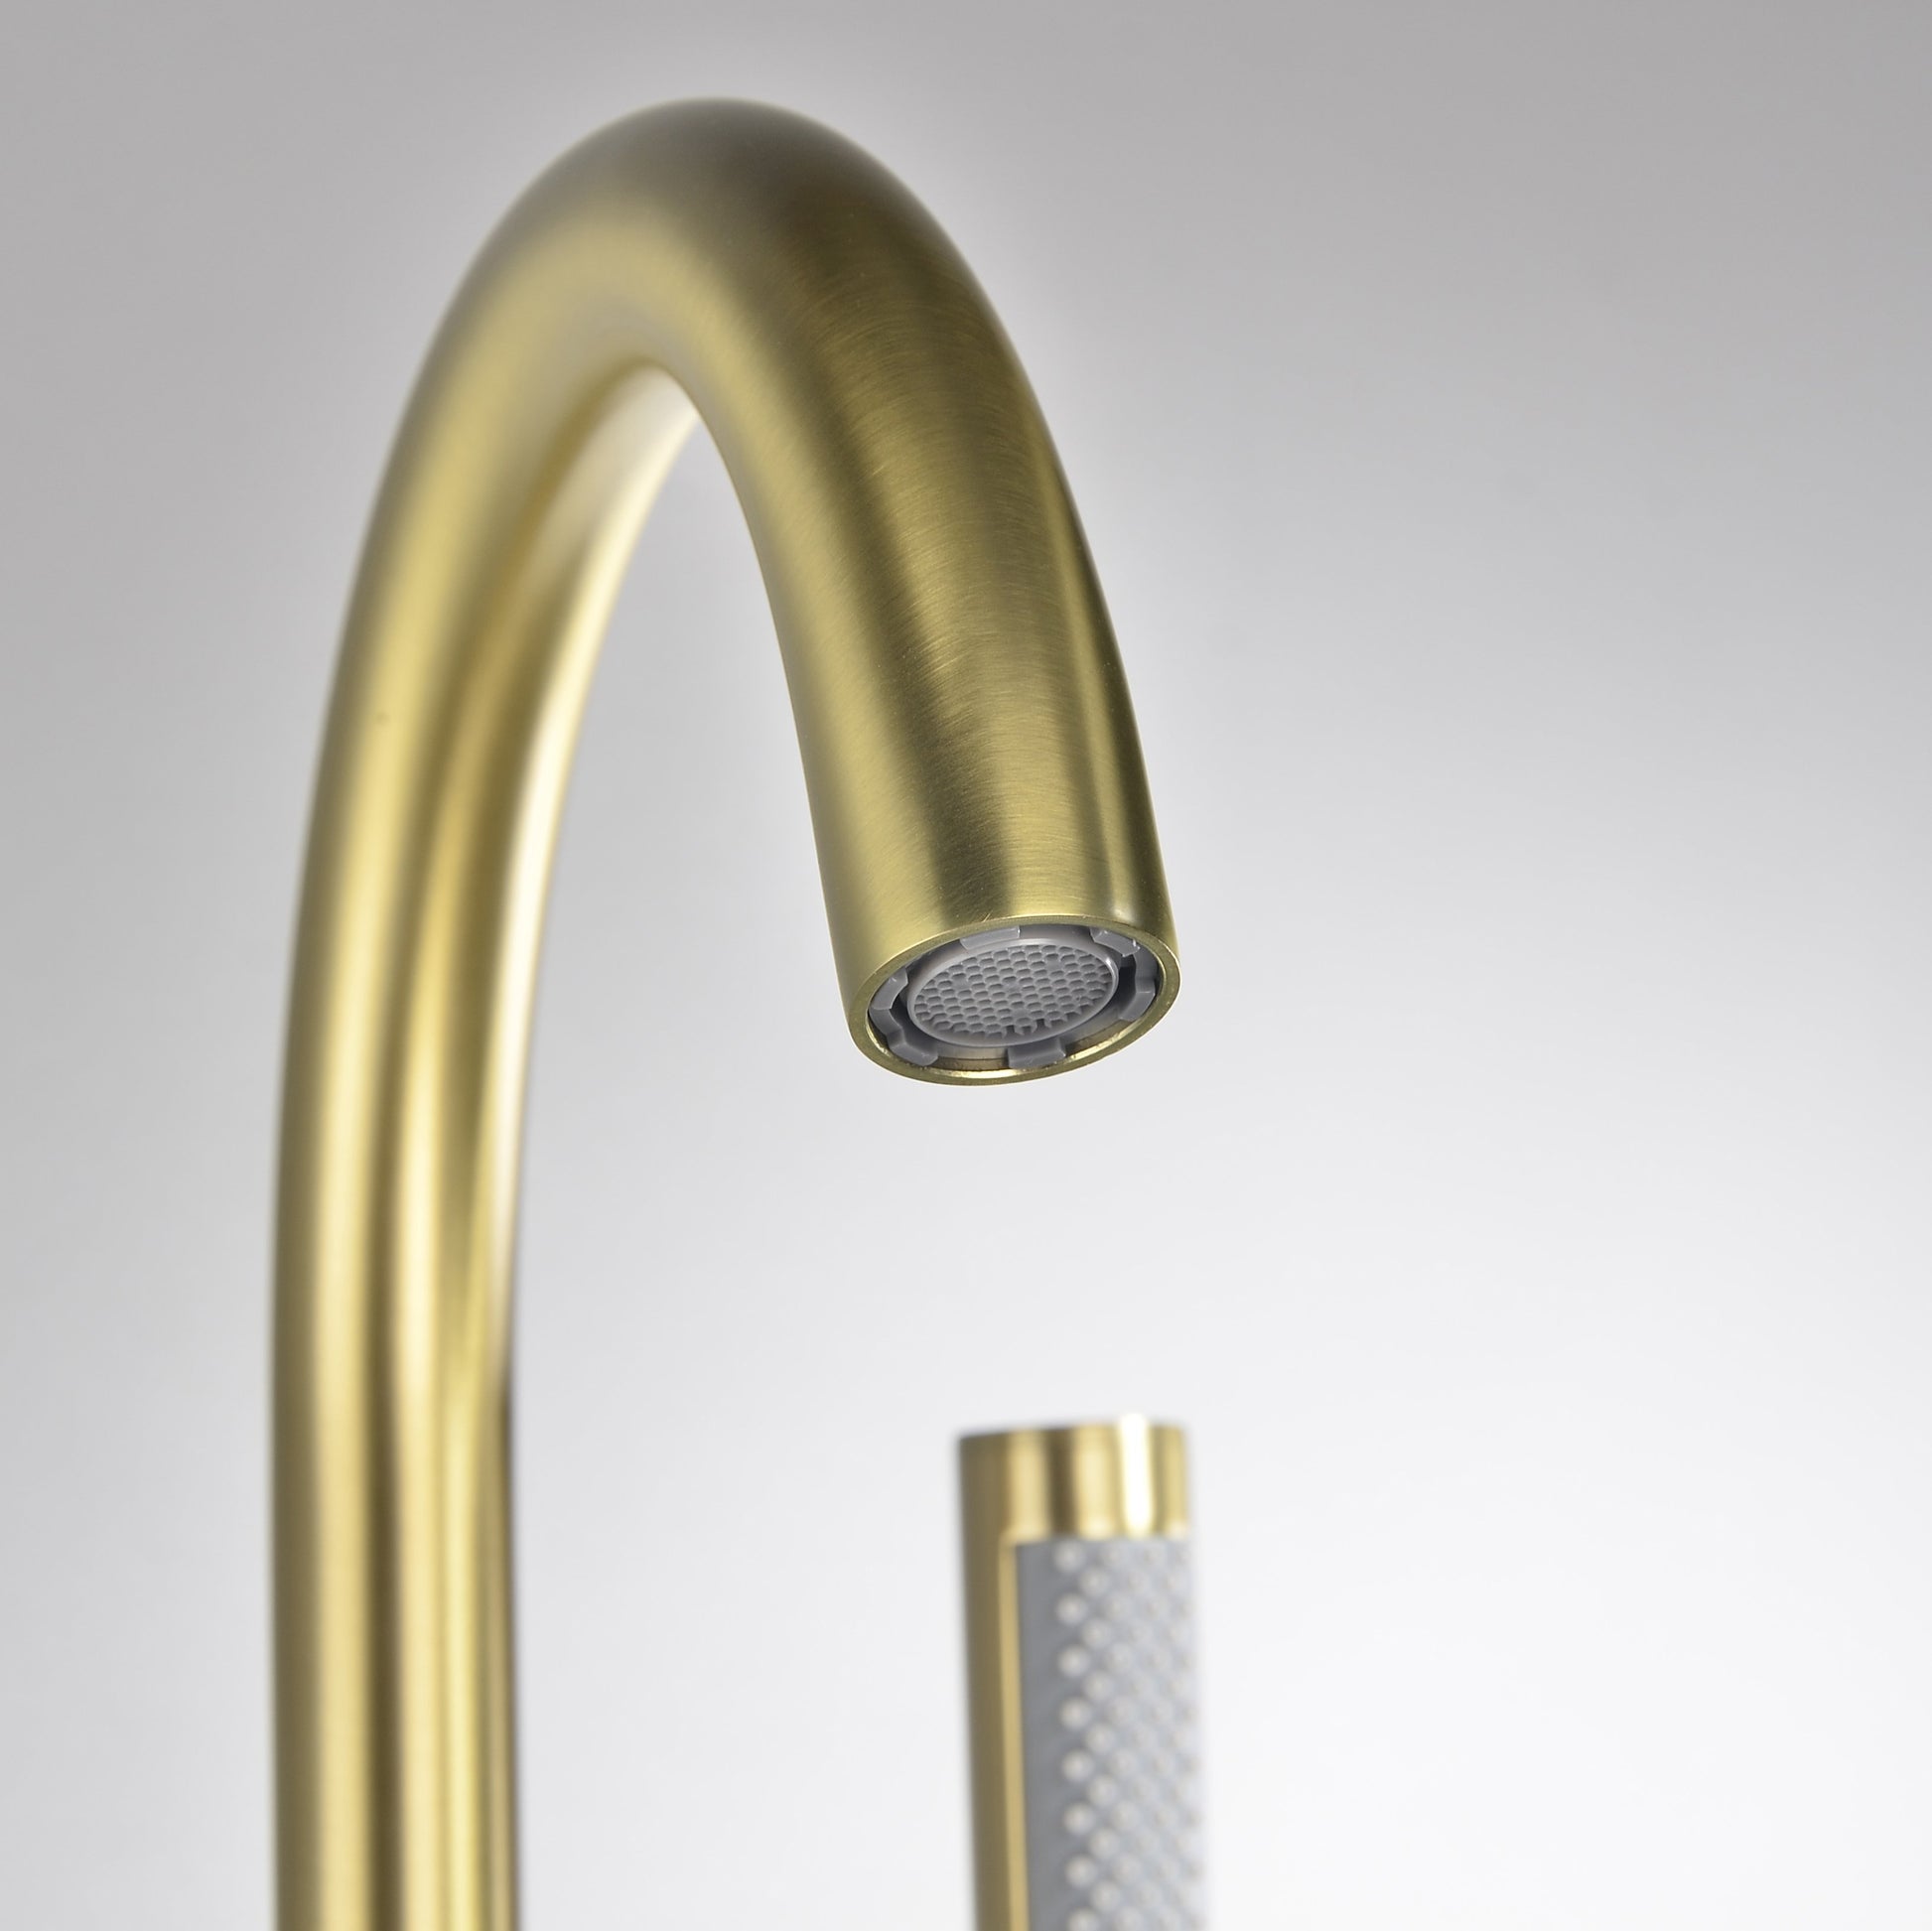 Freestanding Floor Mount 2-Handle Bath Tub Filler Faucet with Handheld Shower in Brushed Gold - Alipuinc